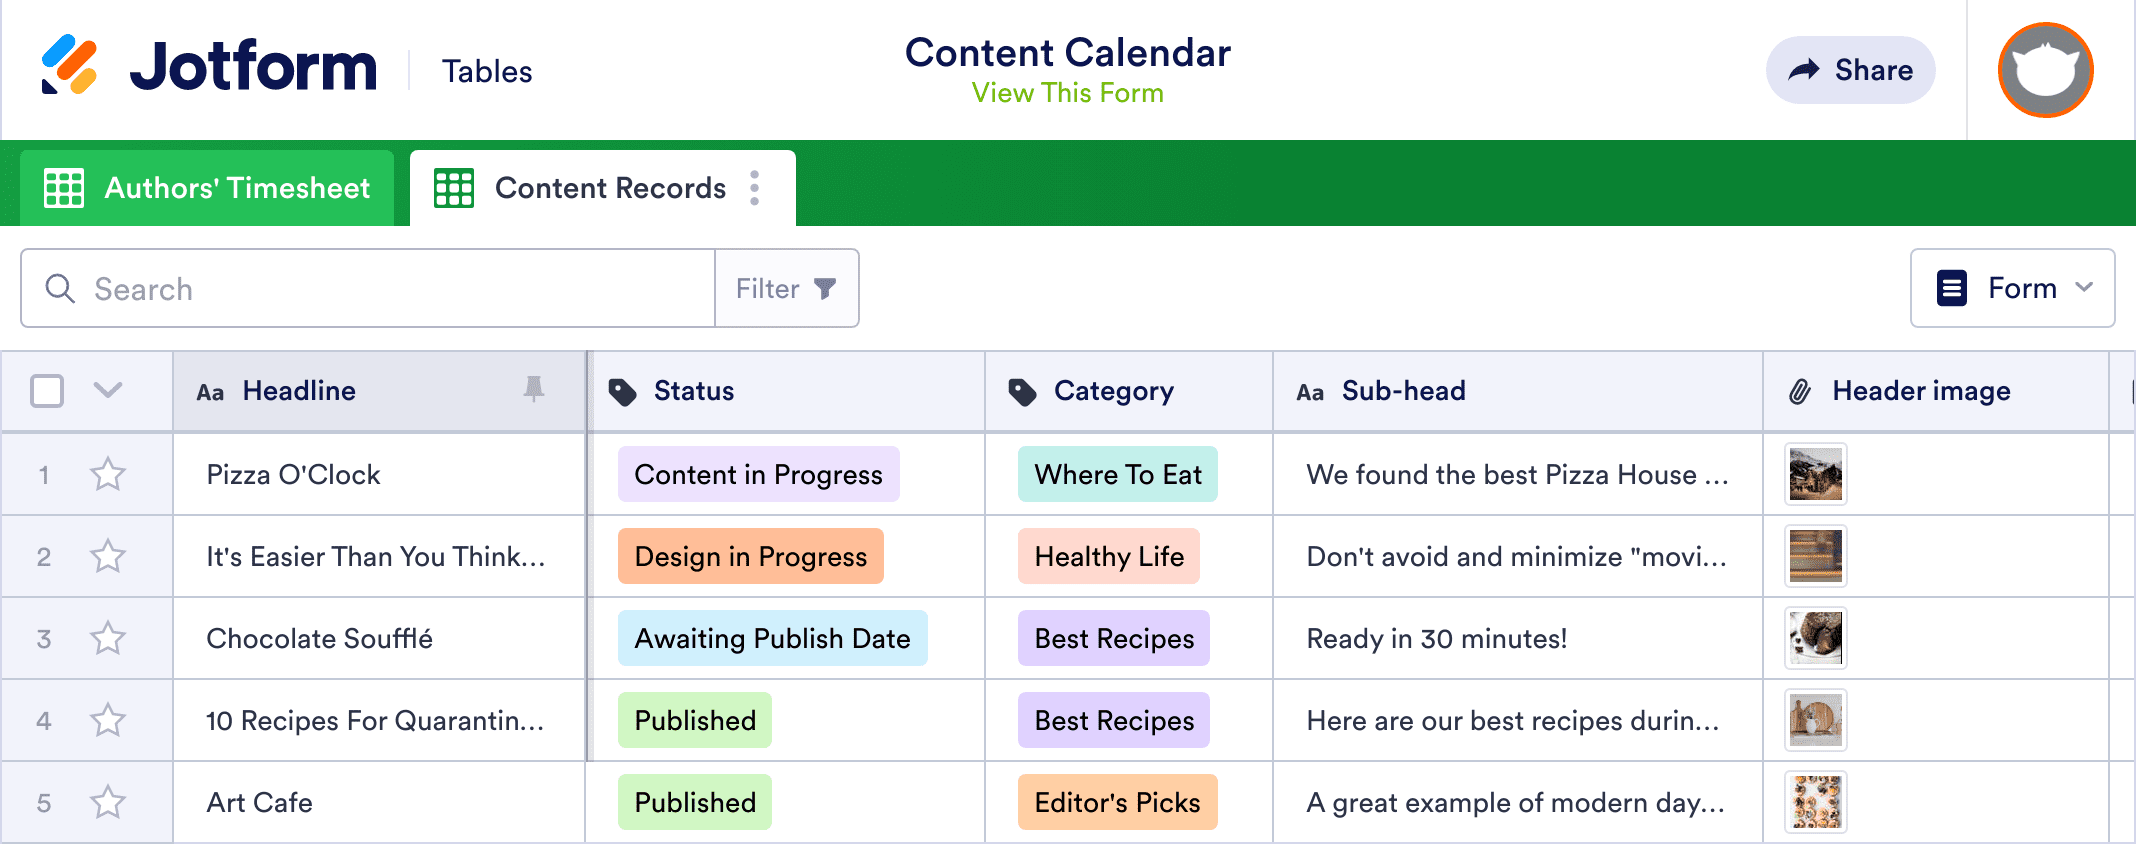 Content Calendar Template | Jotform Tables